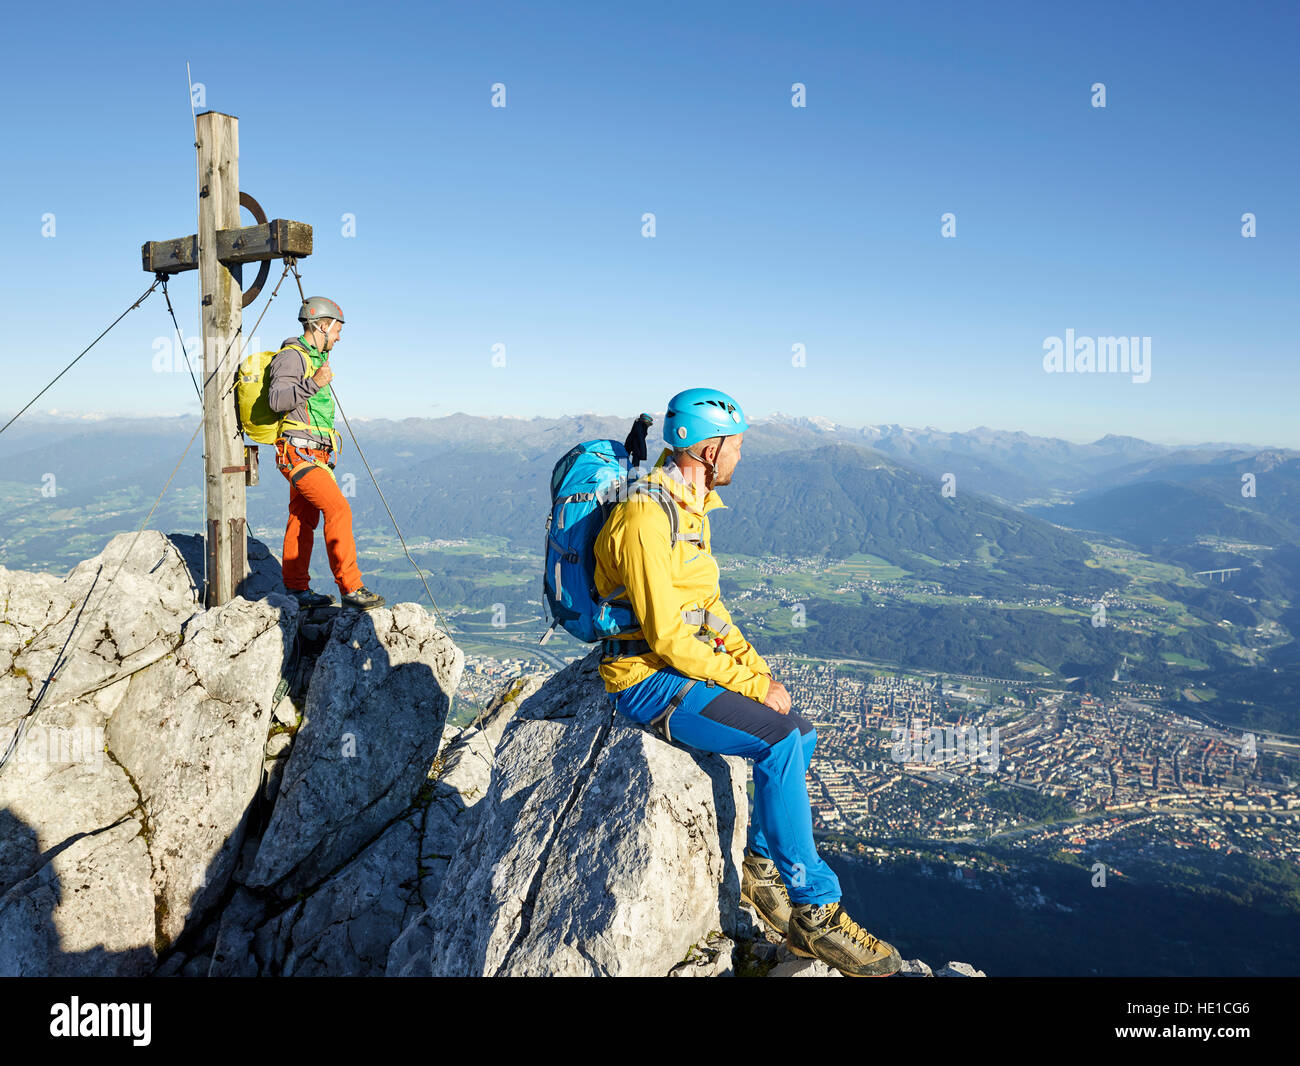 Sommet cross Nordkette, deux alpinistes enjoying view en haut, Nordkette Innsbruck, Tyrol, Autriche Banque D'Images